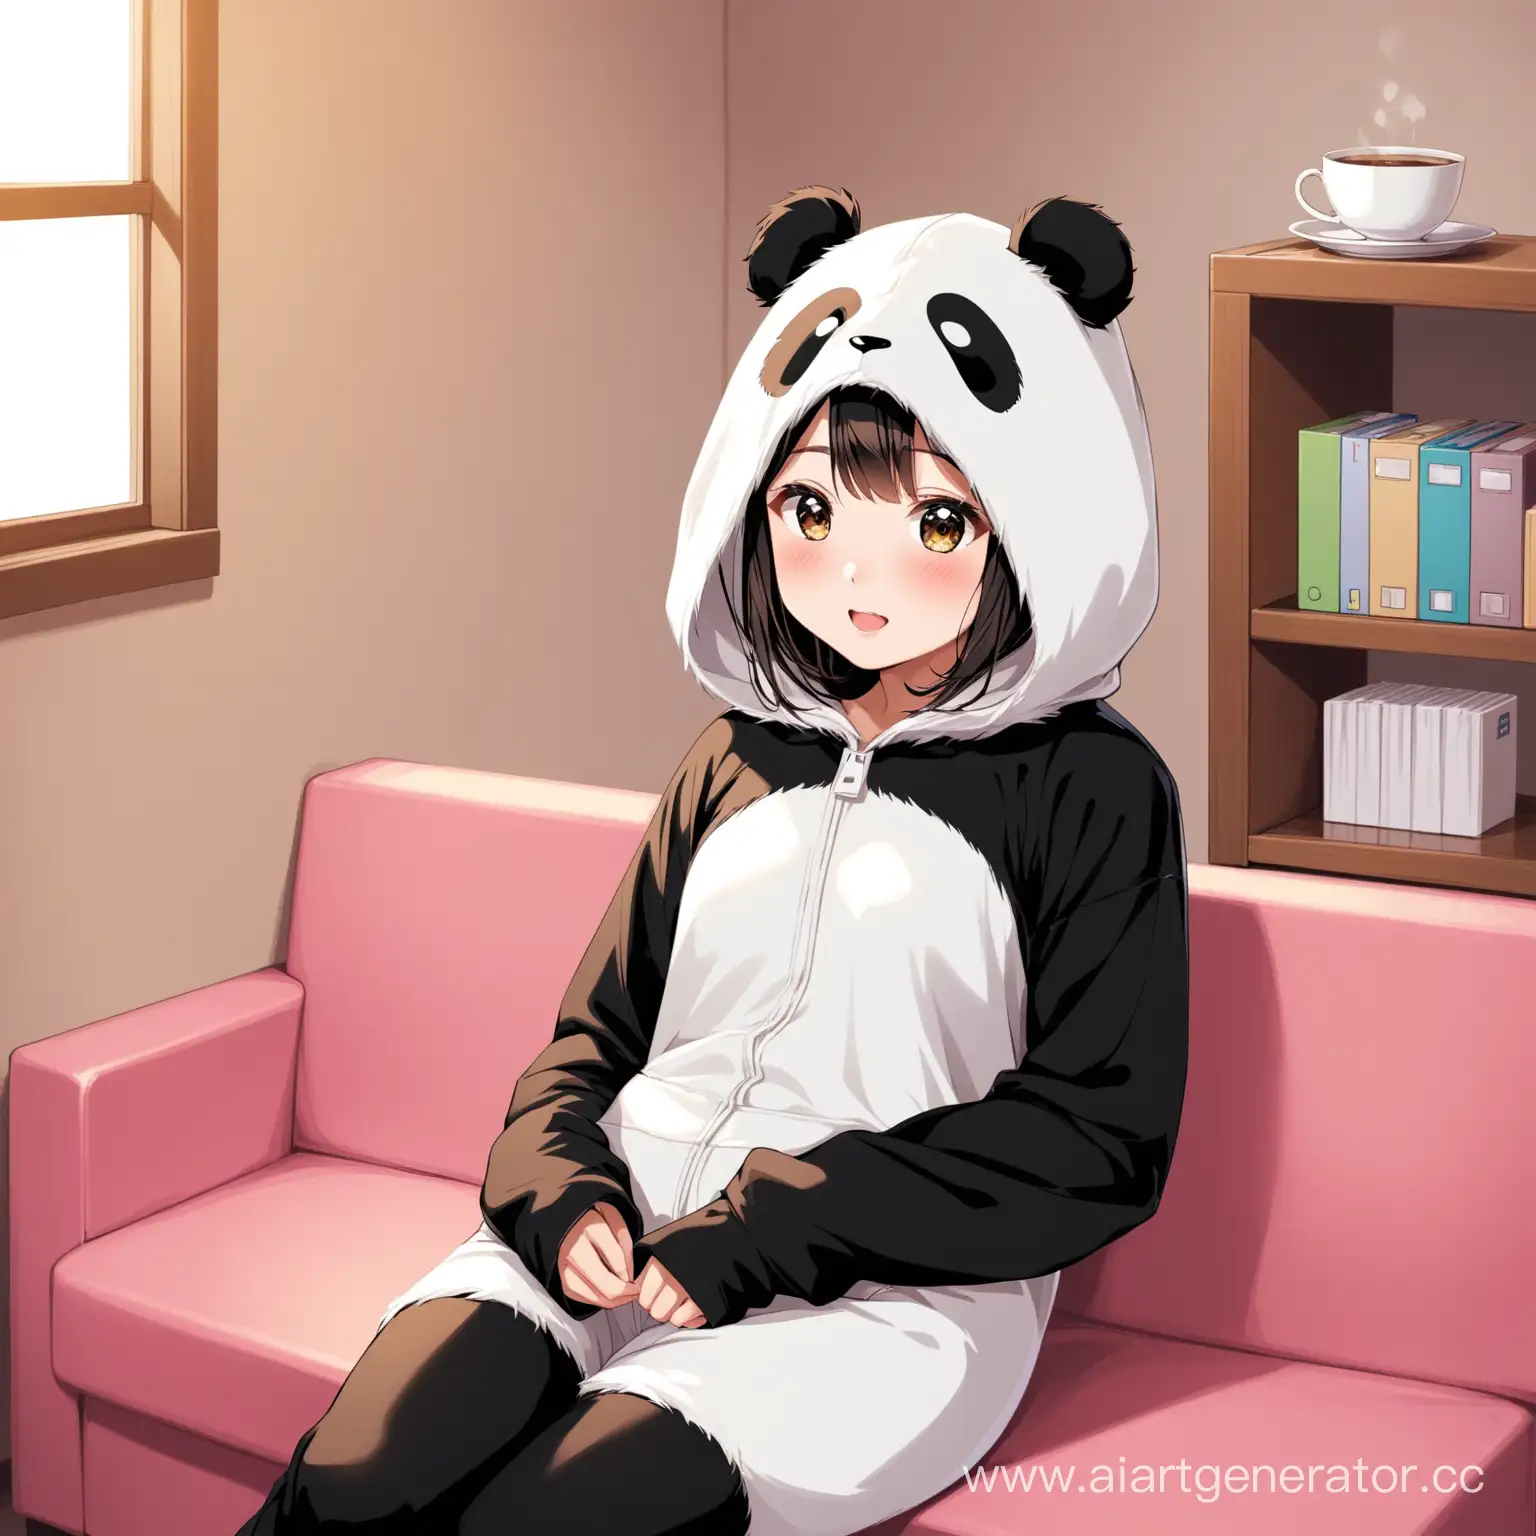 Girl-in-Panda-Costume-Enjoying-a-Playful-Indoor-Adventure